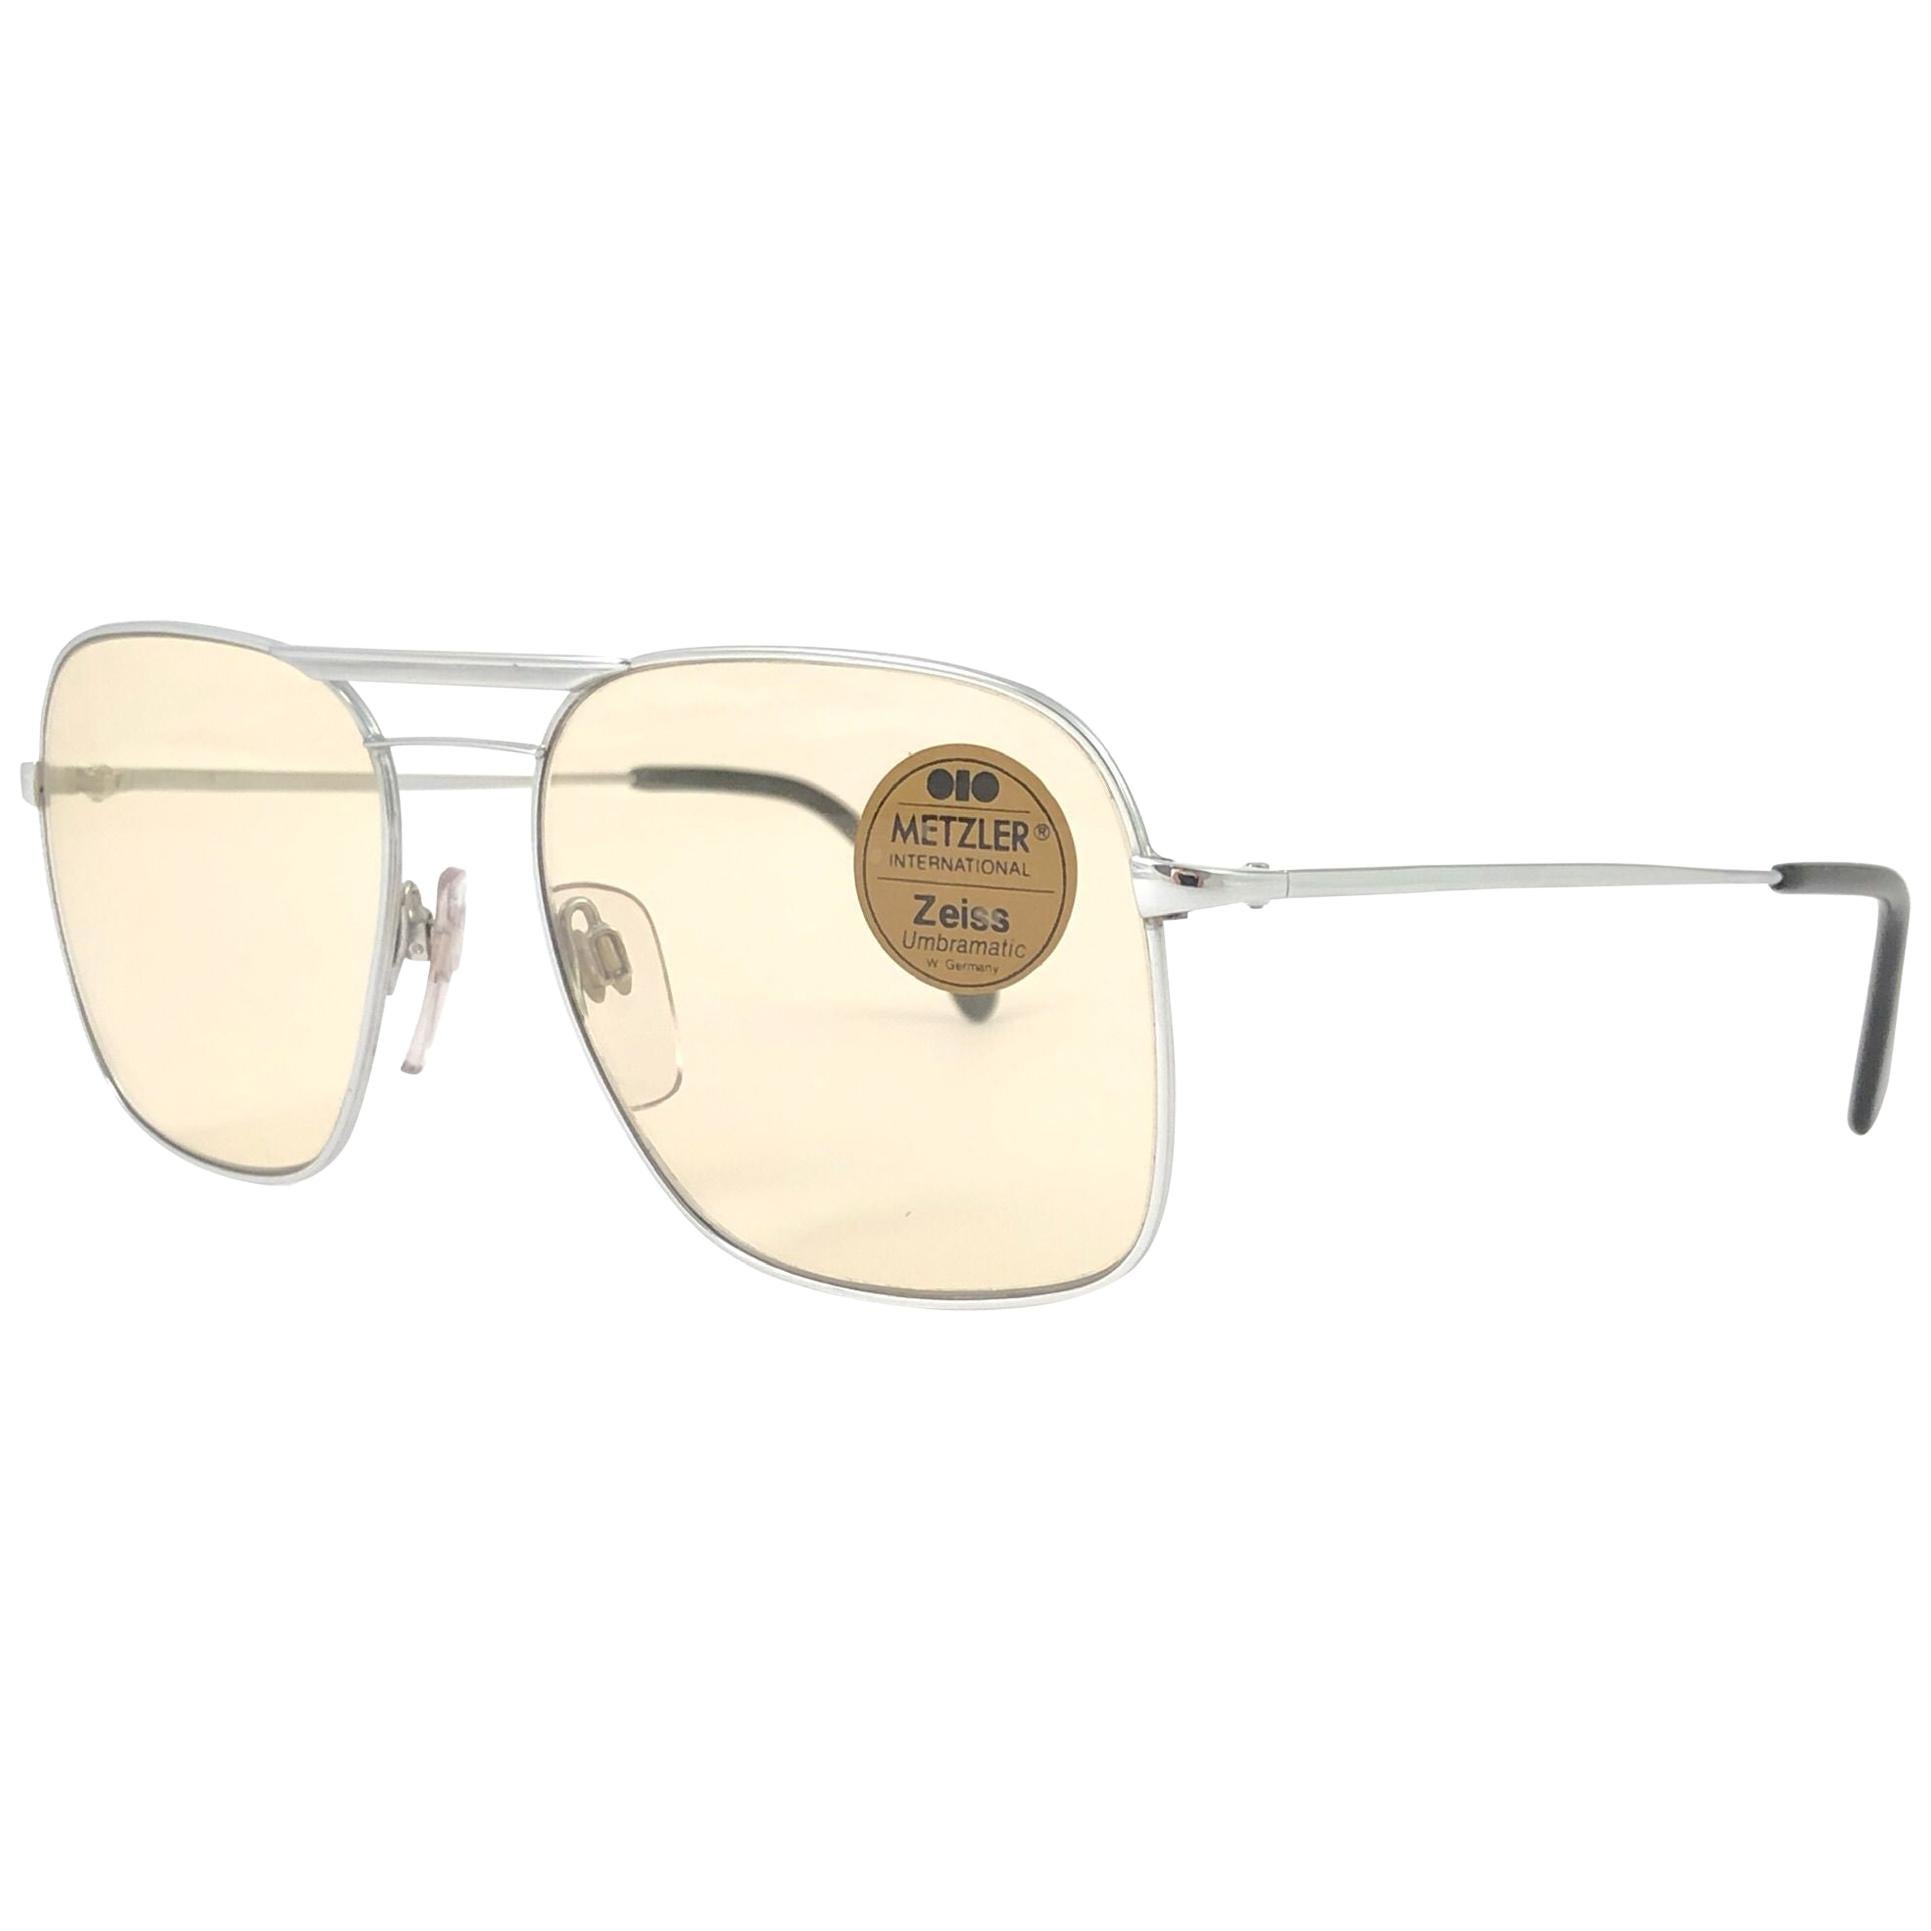 New Vintage Metzler Zeiss Umbramatic 2635 Oversized Sunglasses West Germany 80's